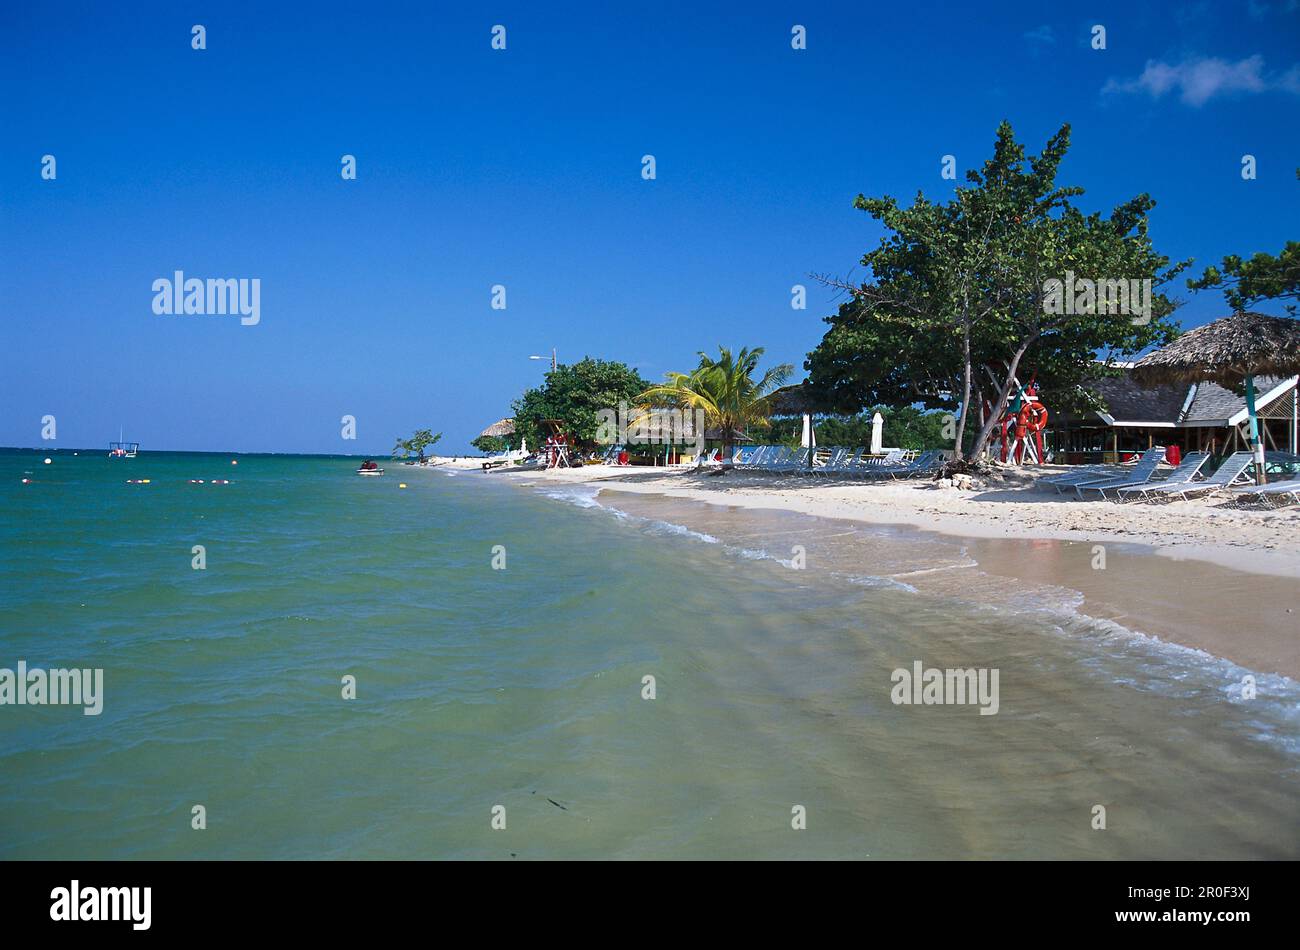 Beach with sunloungers under blue sky, Beach Club, Ritz Charlton Rose